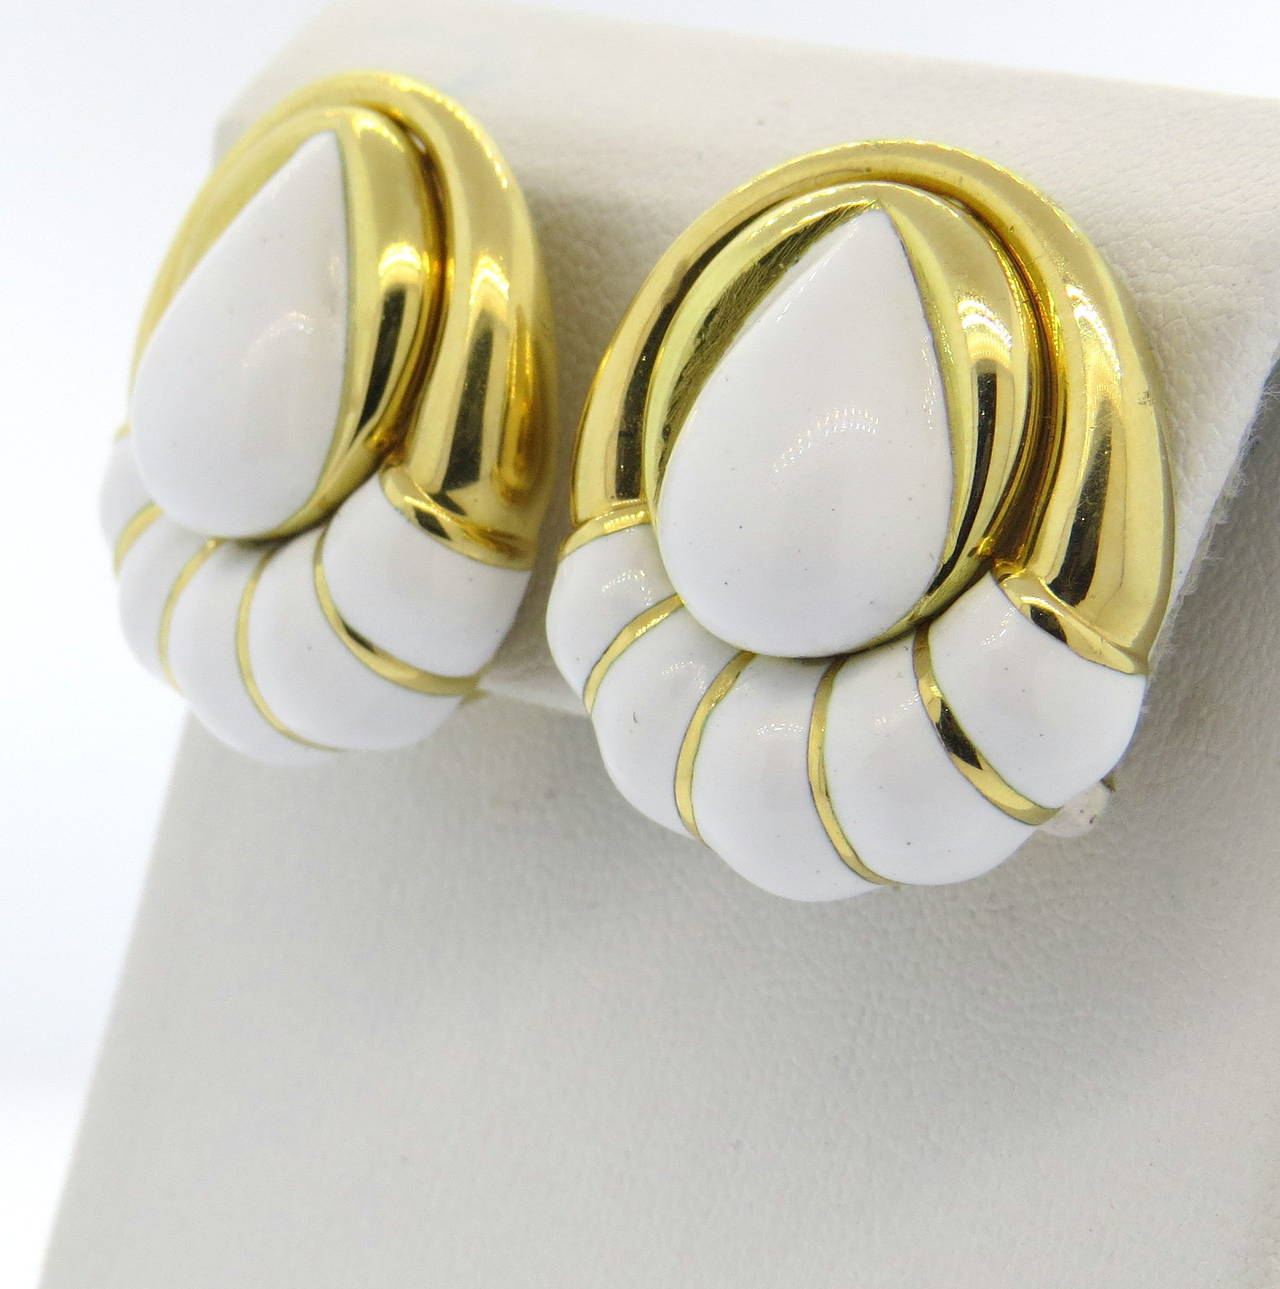 18k gold David Webb earrings decorated with white enamel. Earrings measure 27mm x 24mm. Marked Webb. Weight - 31.5 grams